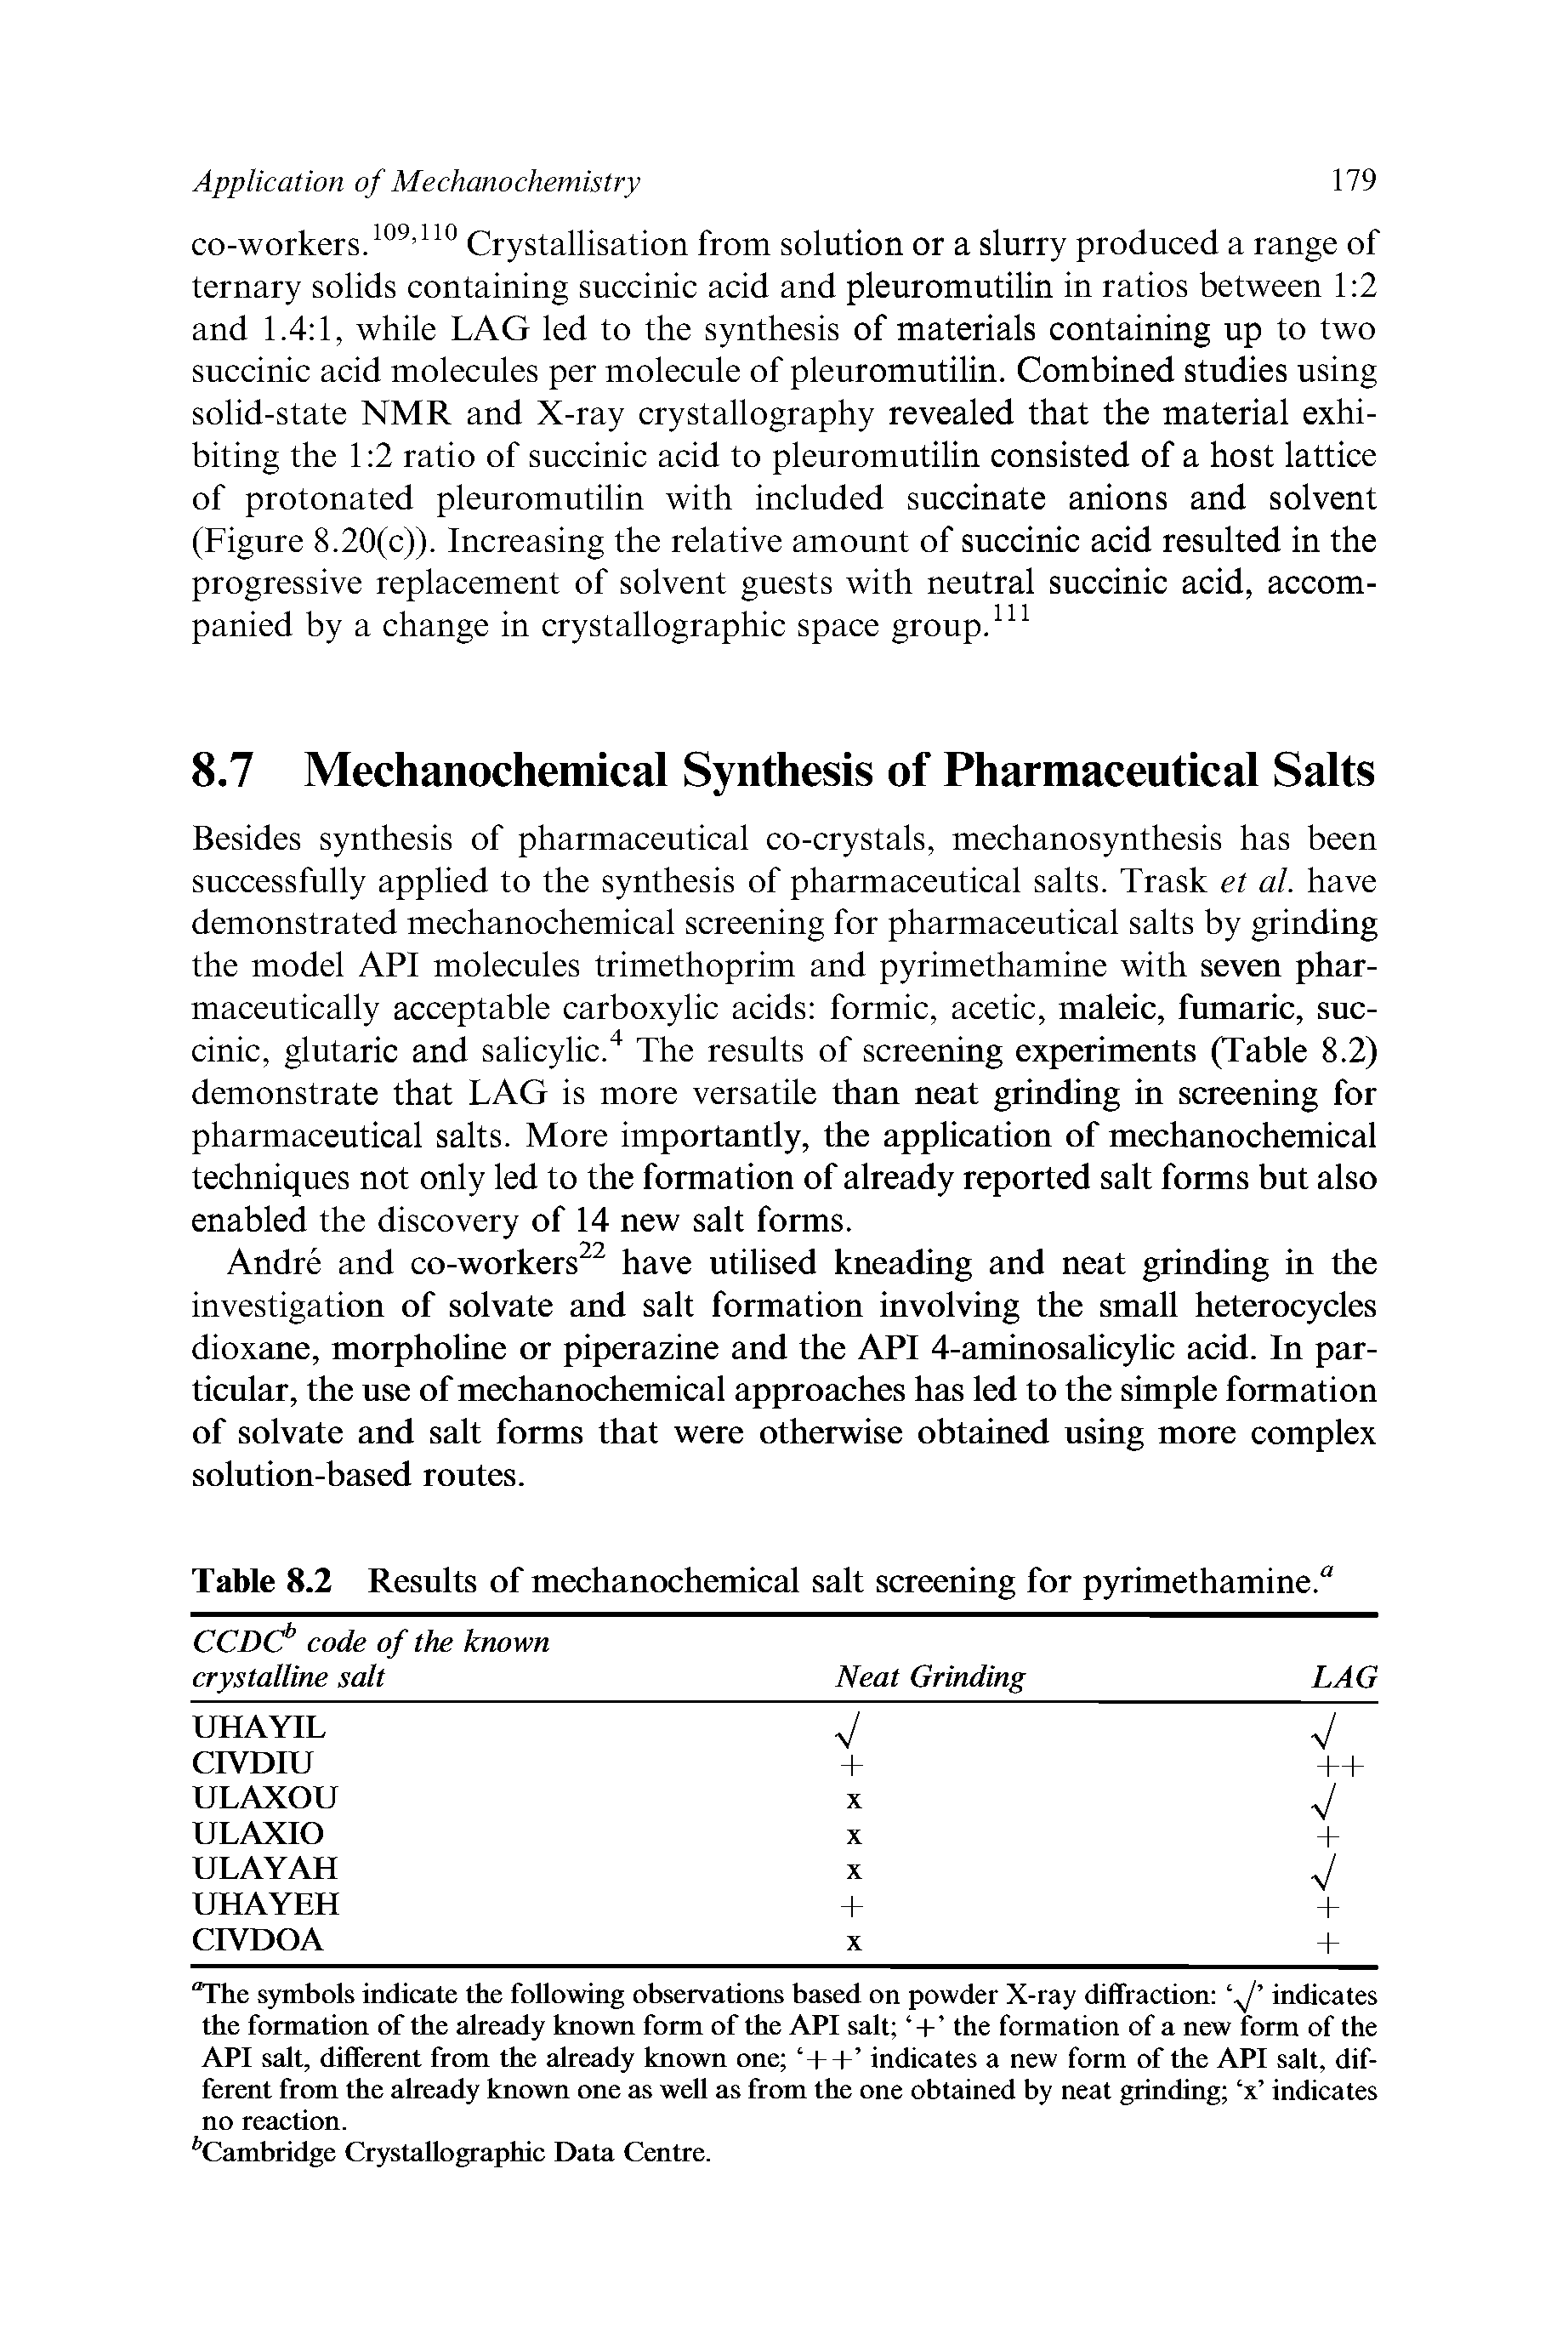 Table 8.2 Results of mechanochemical salt screening for pyrimethamine. ...